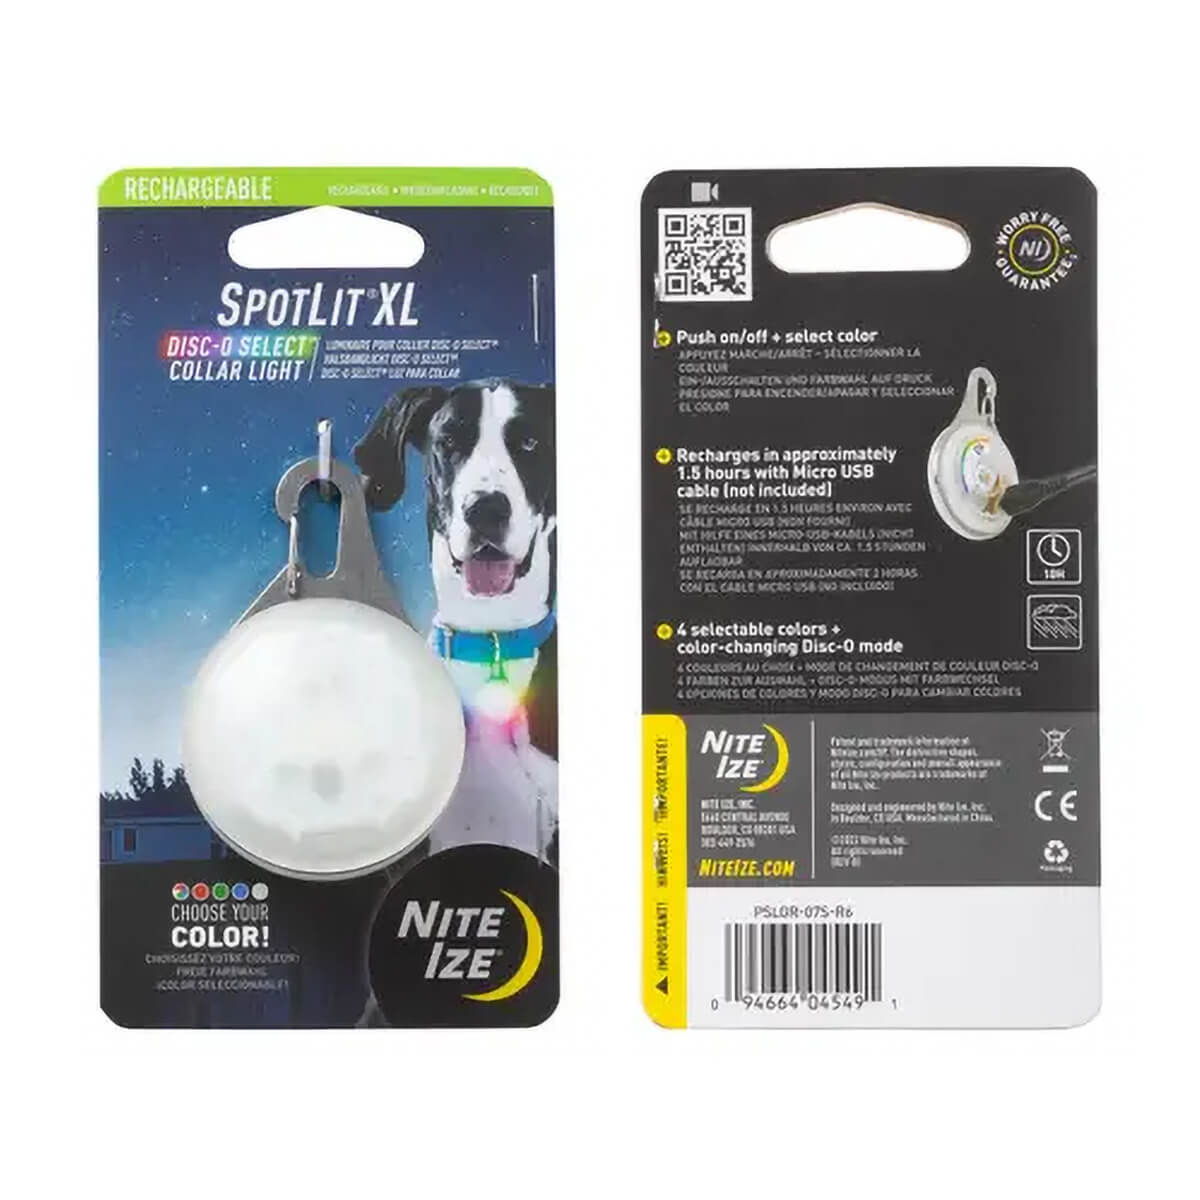 Spotlit® Xl Rechargeable Collar Light - Disc-O Select™